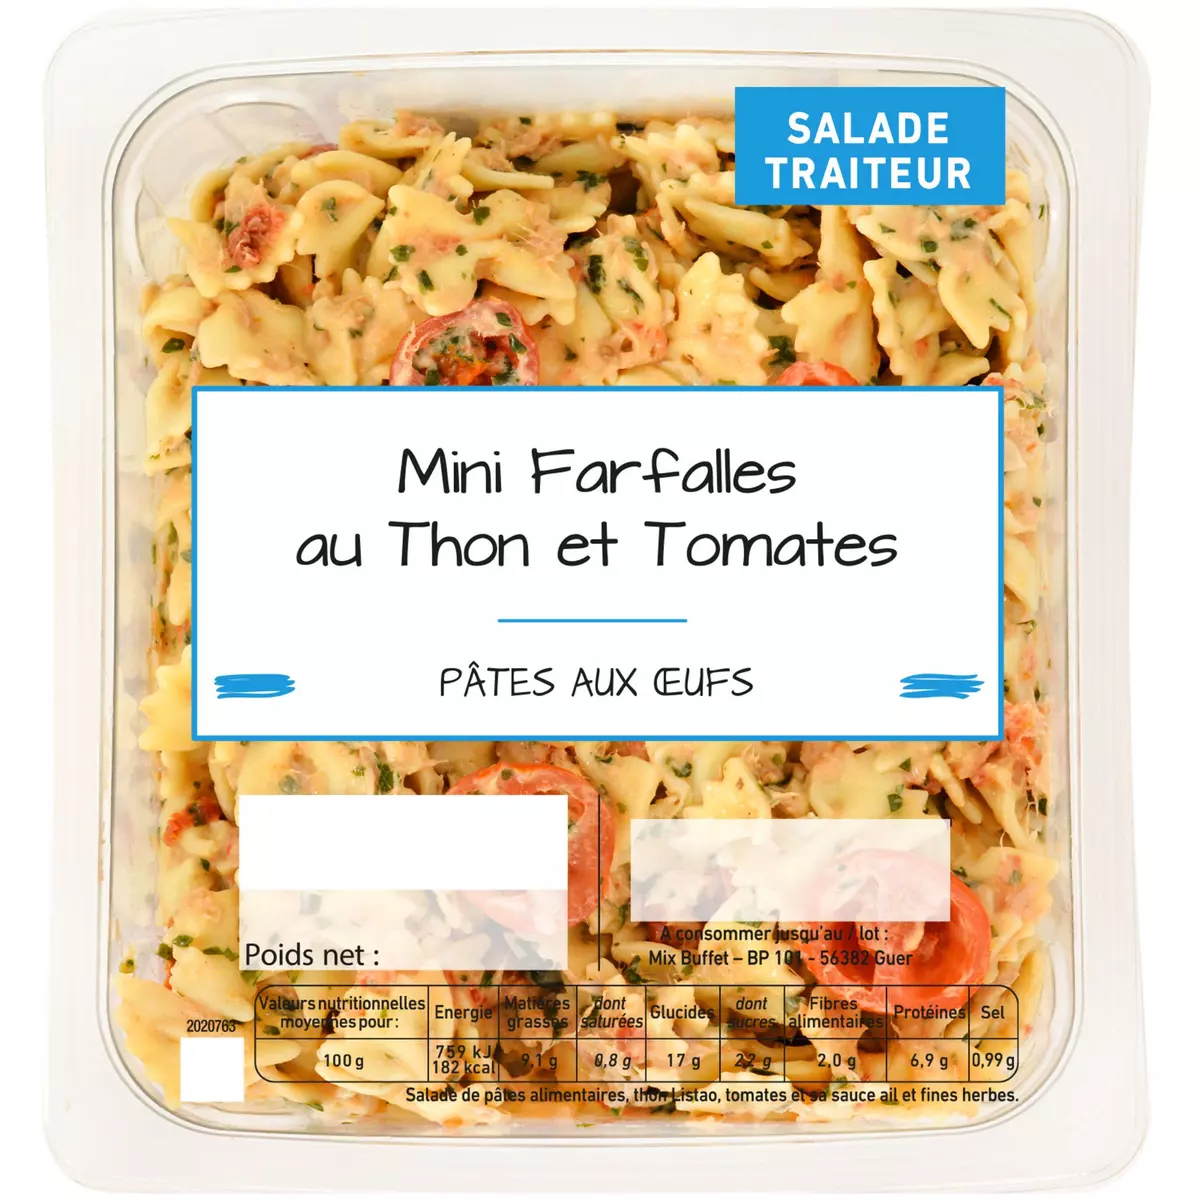 MIX Salade mini farfalles au thon et tomates 4 portions 800g